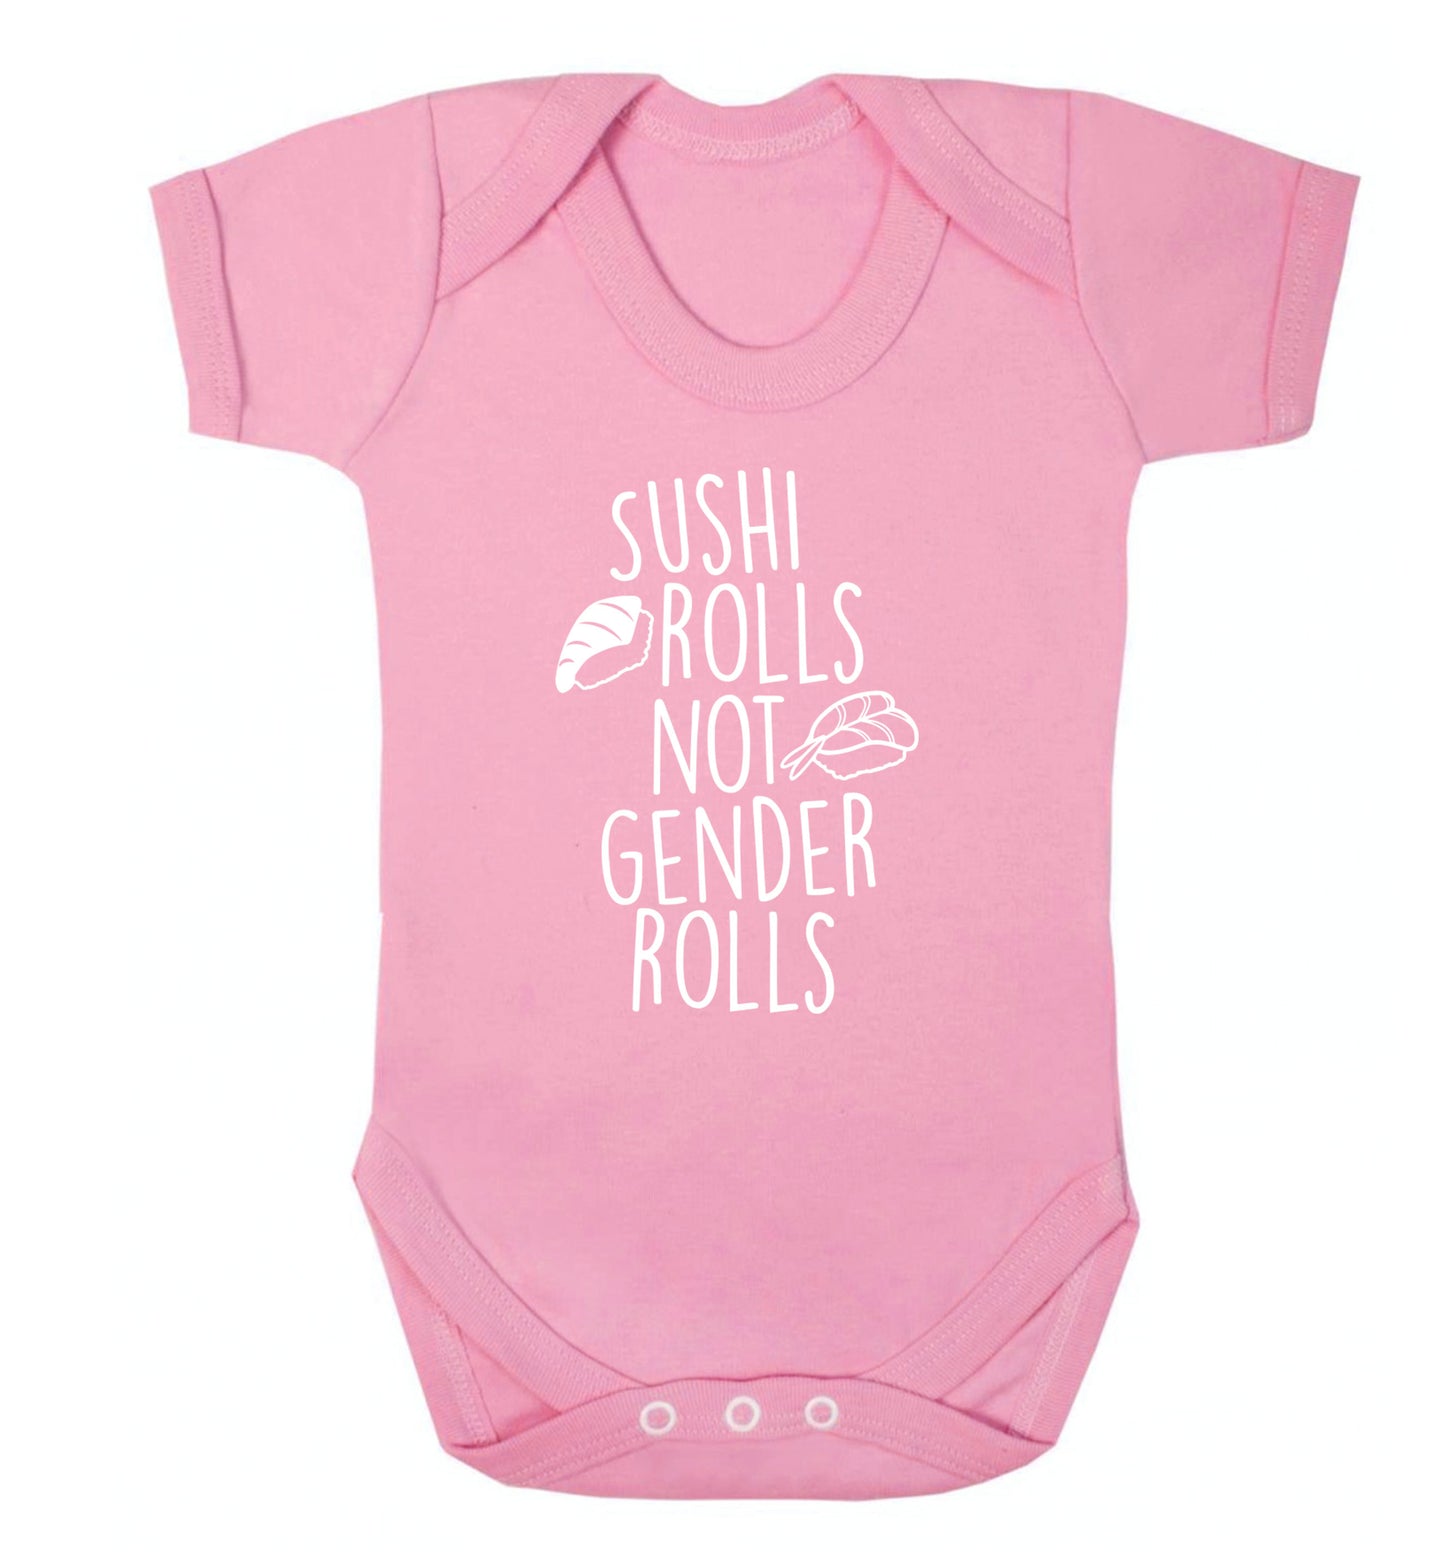 Sushi rolls not gender rolls Baby Vest pale pink 18-24 months